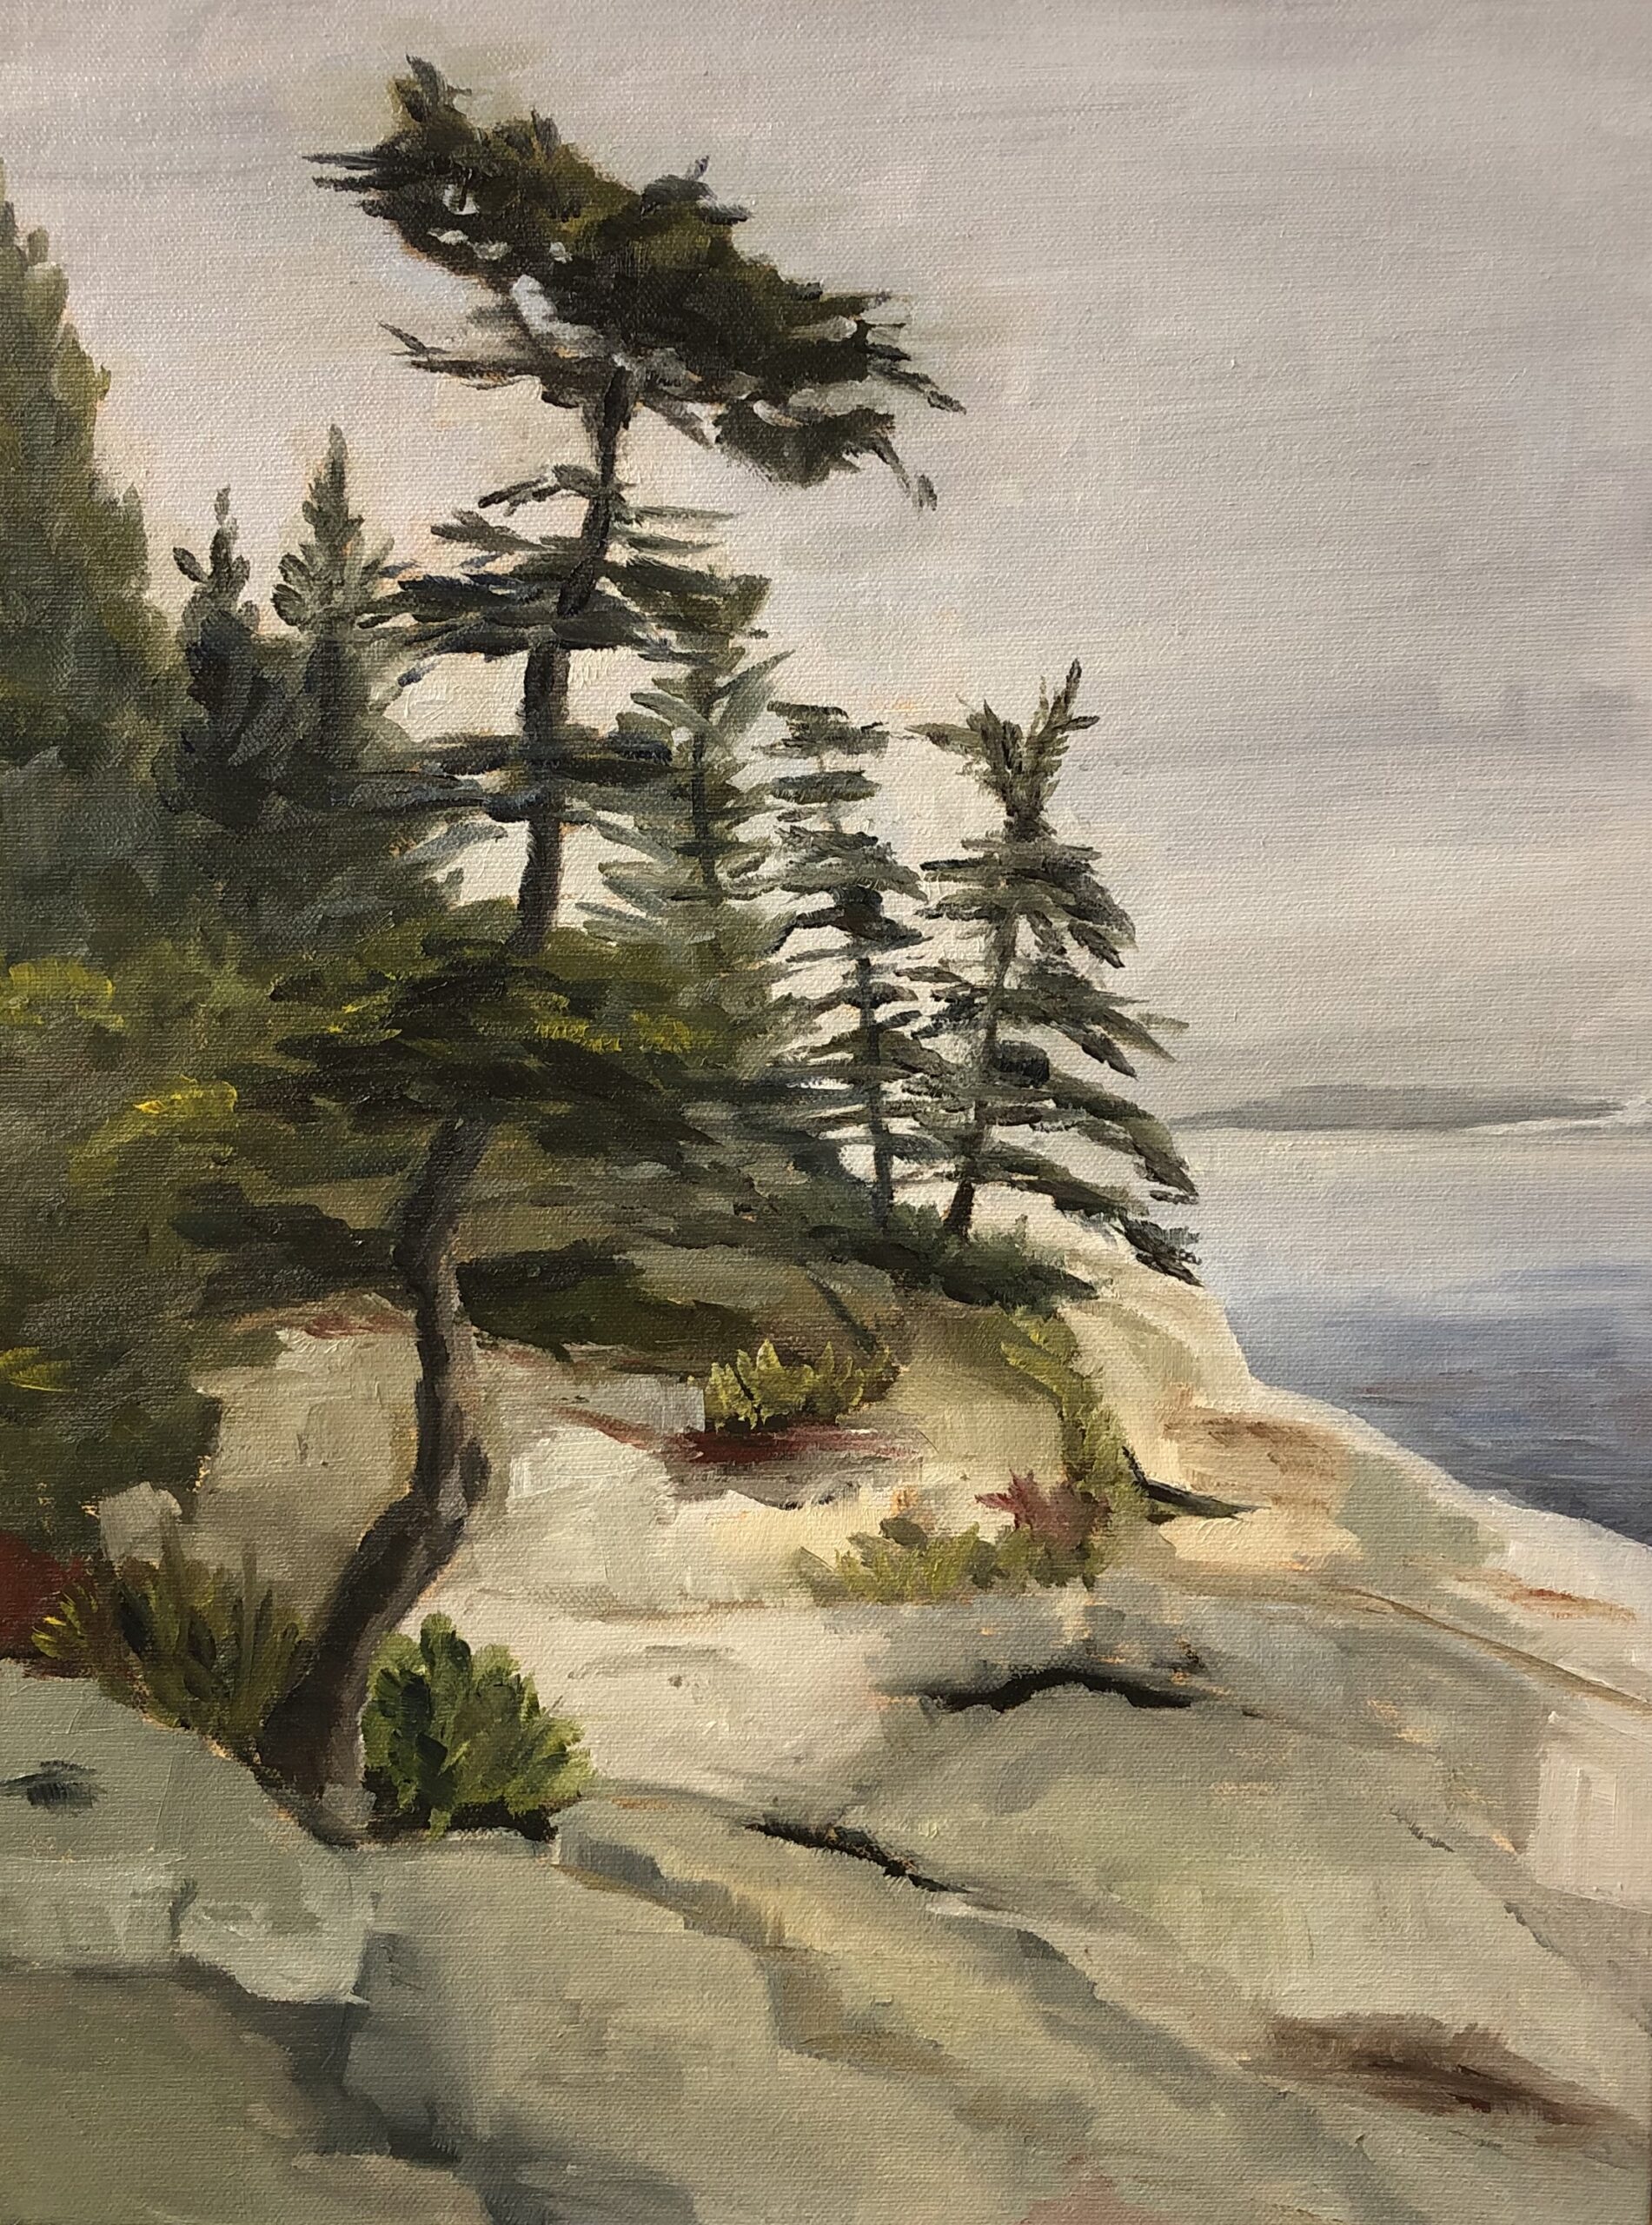 Oil painting of evergreen tree on rocks